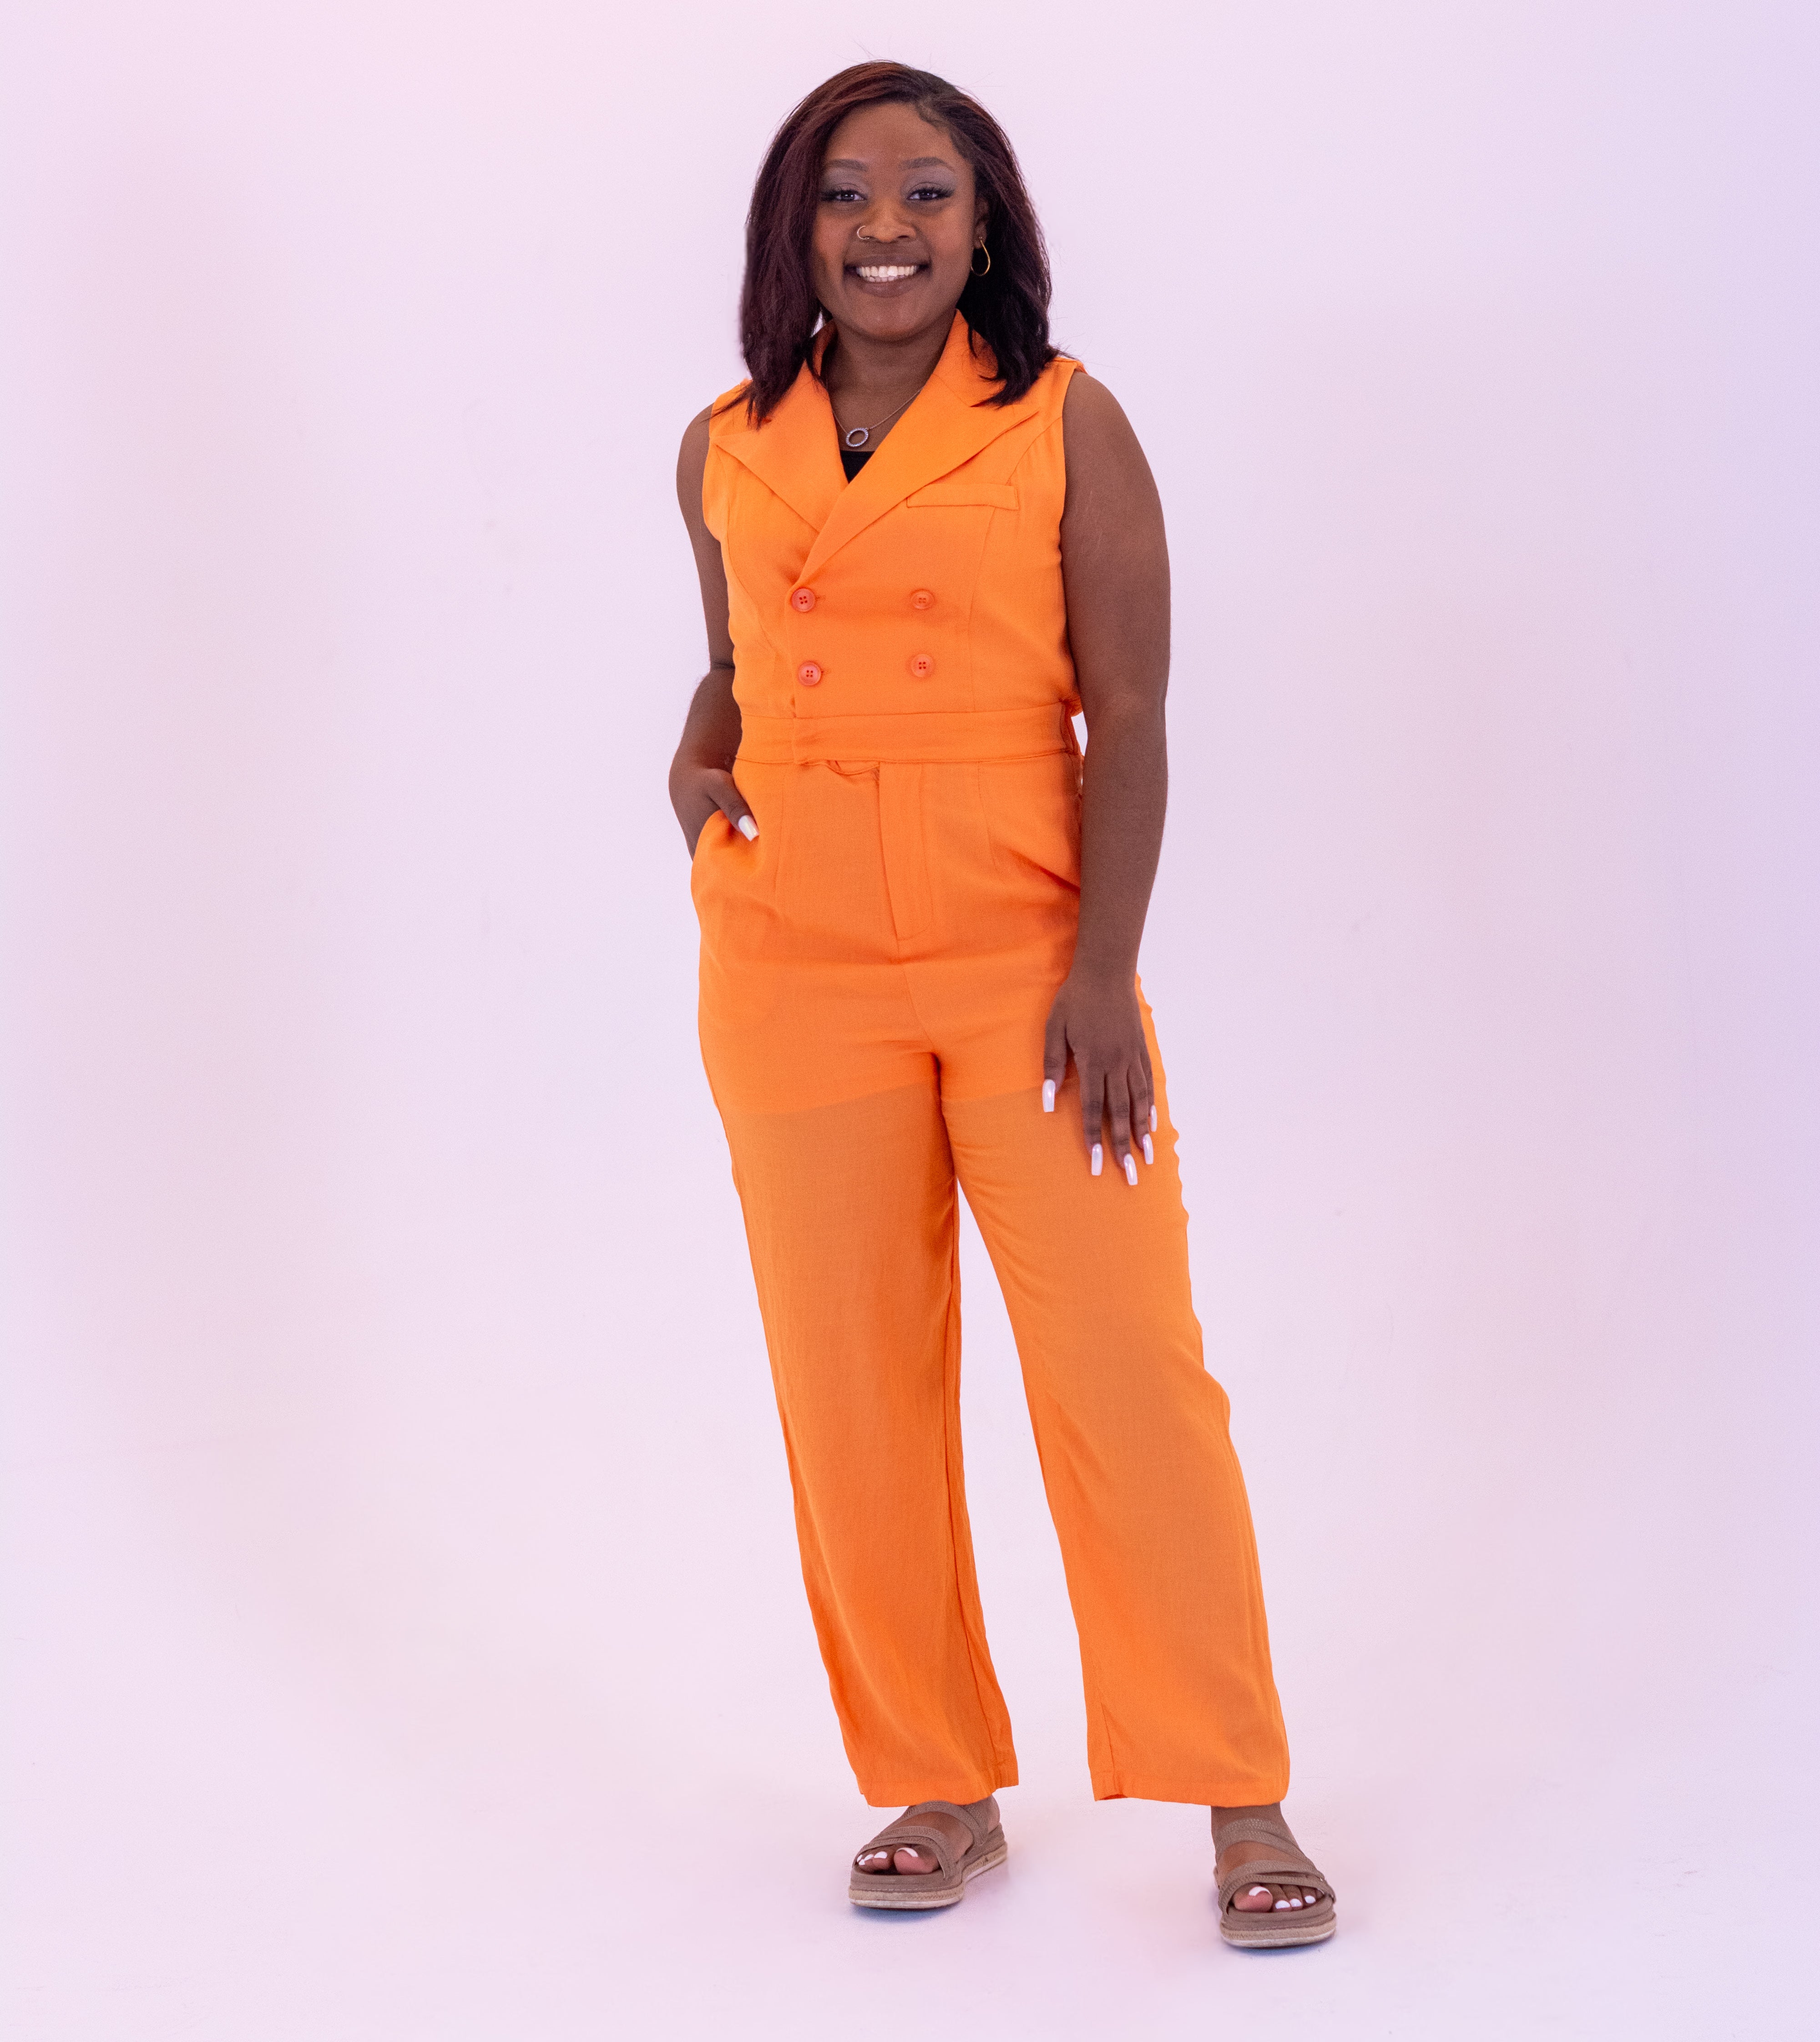 Women's orange jumpsuit with pockets